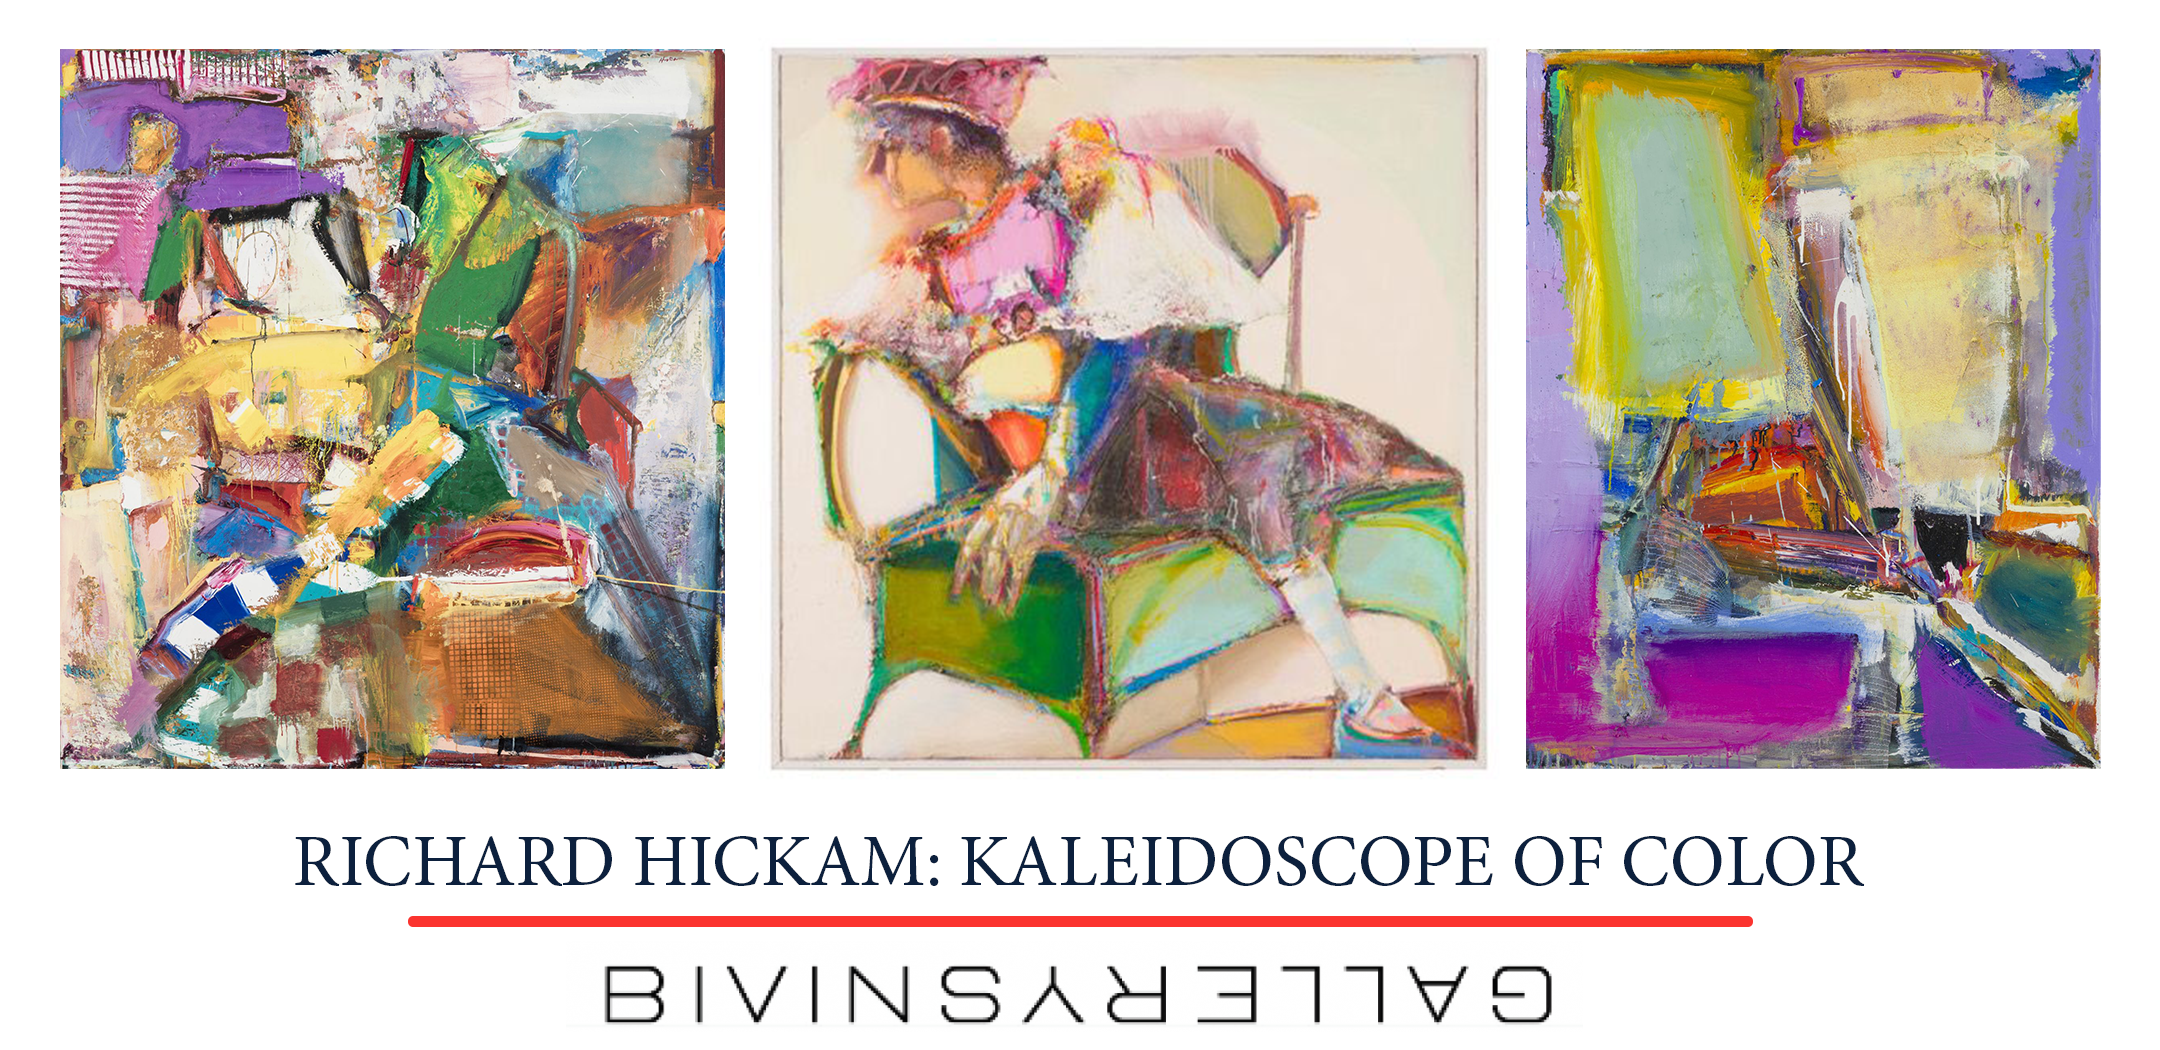 Richard Hickam: Kaleidoscope of Color